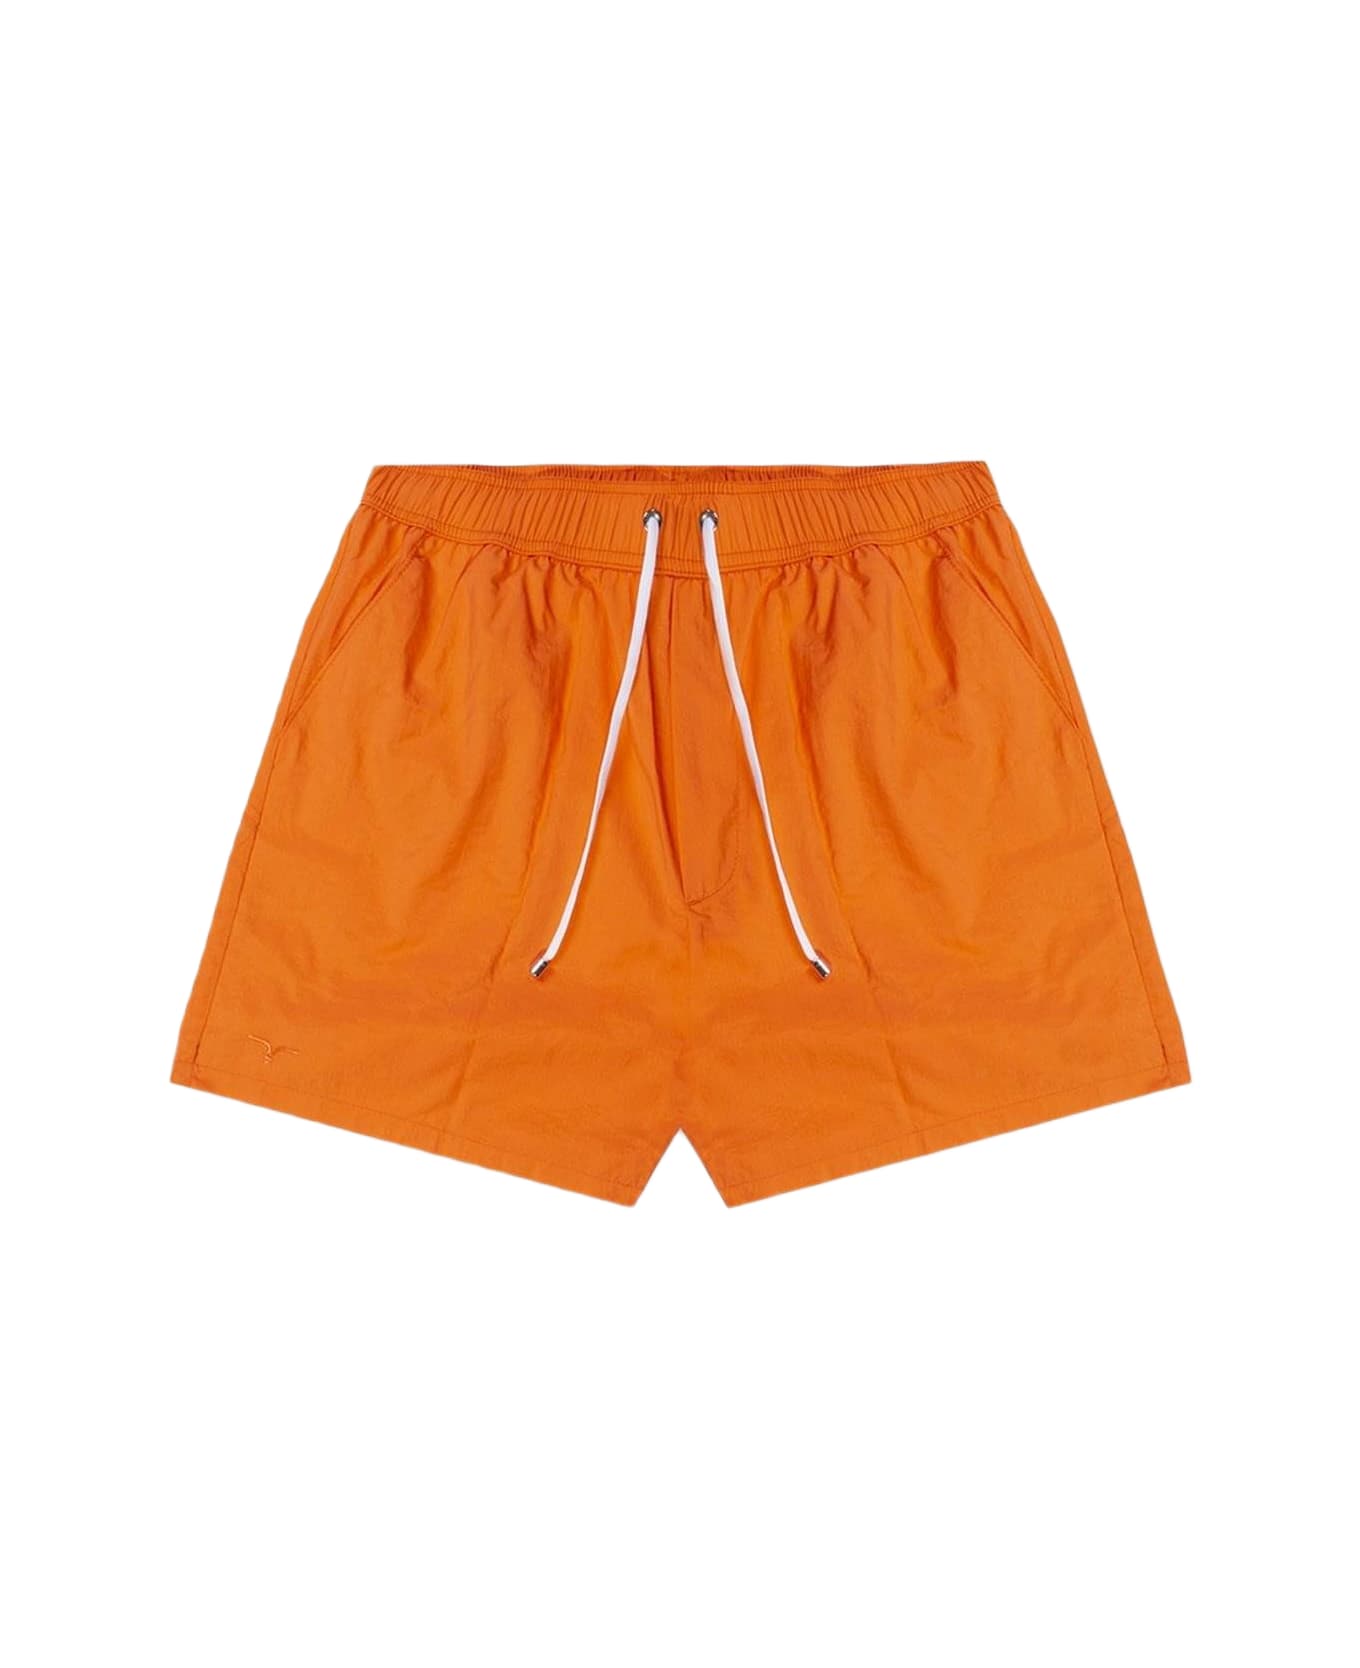 Larusmiani Swim Suit 'cala Di Volpe' Swimming Trunks - Orange